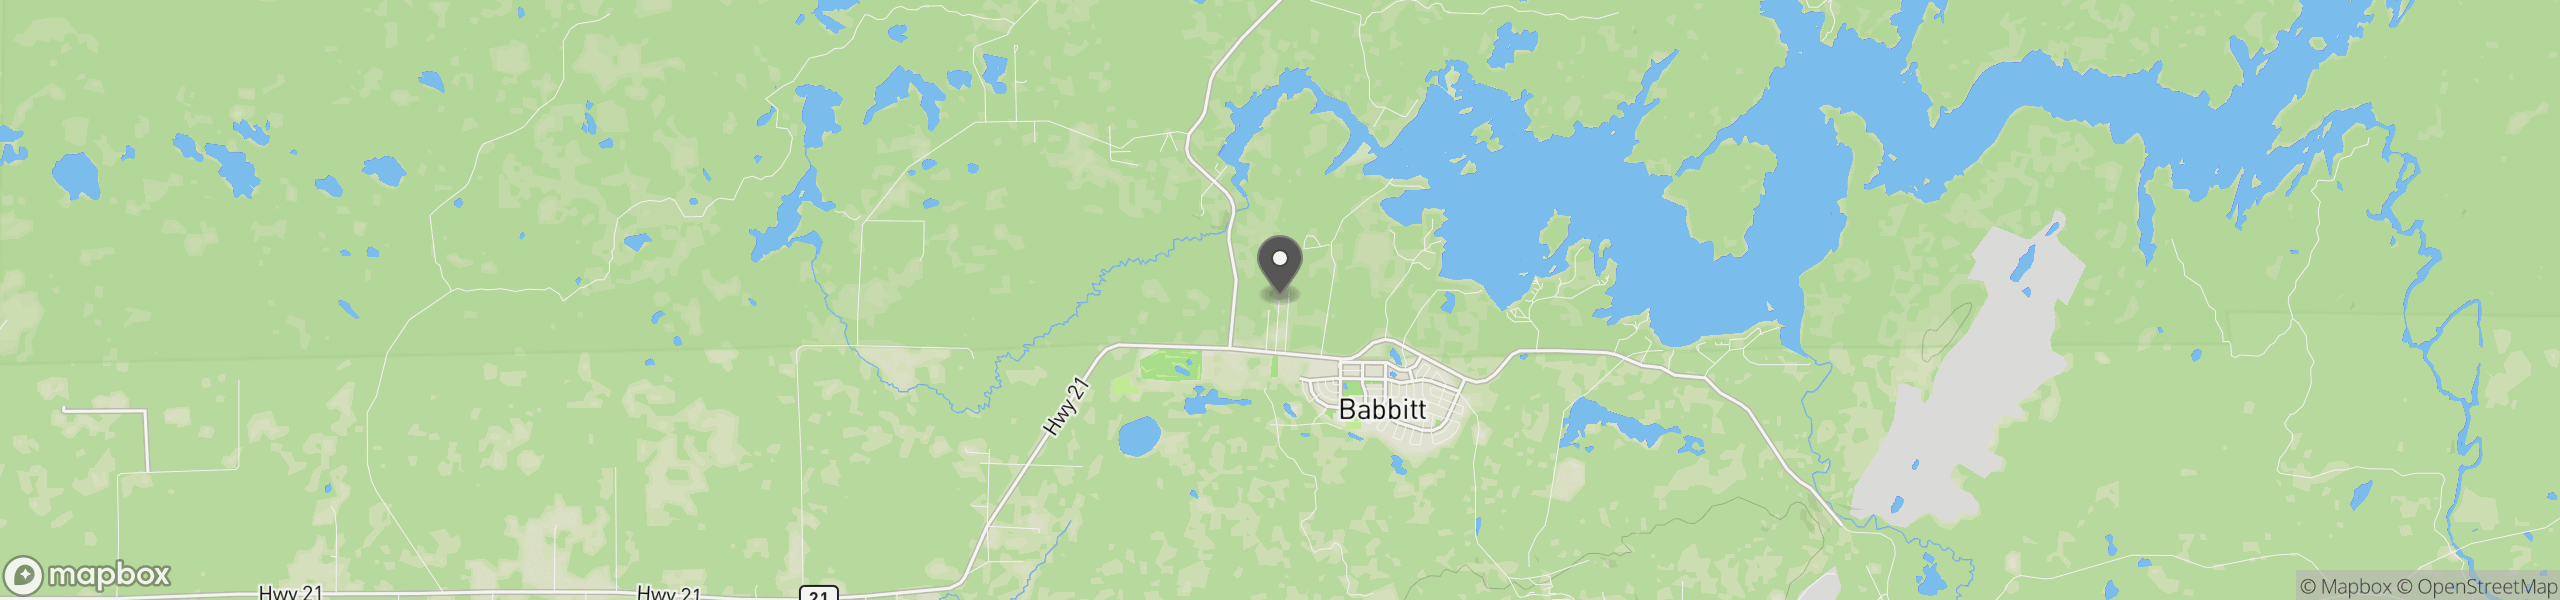 Babbitt, MN 55706